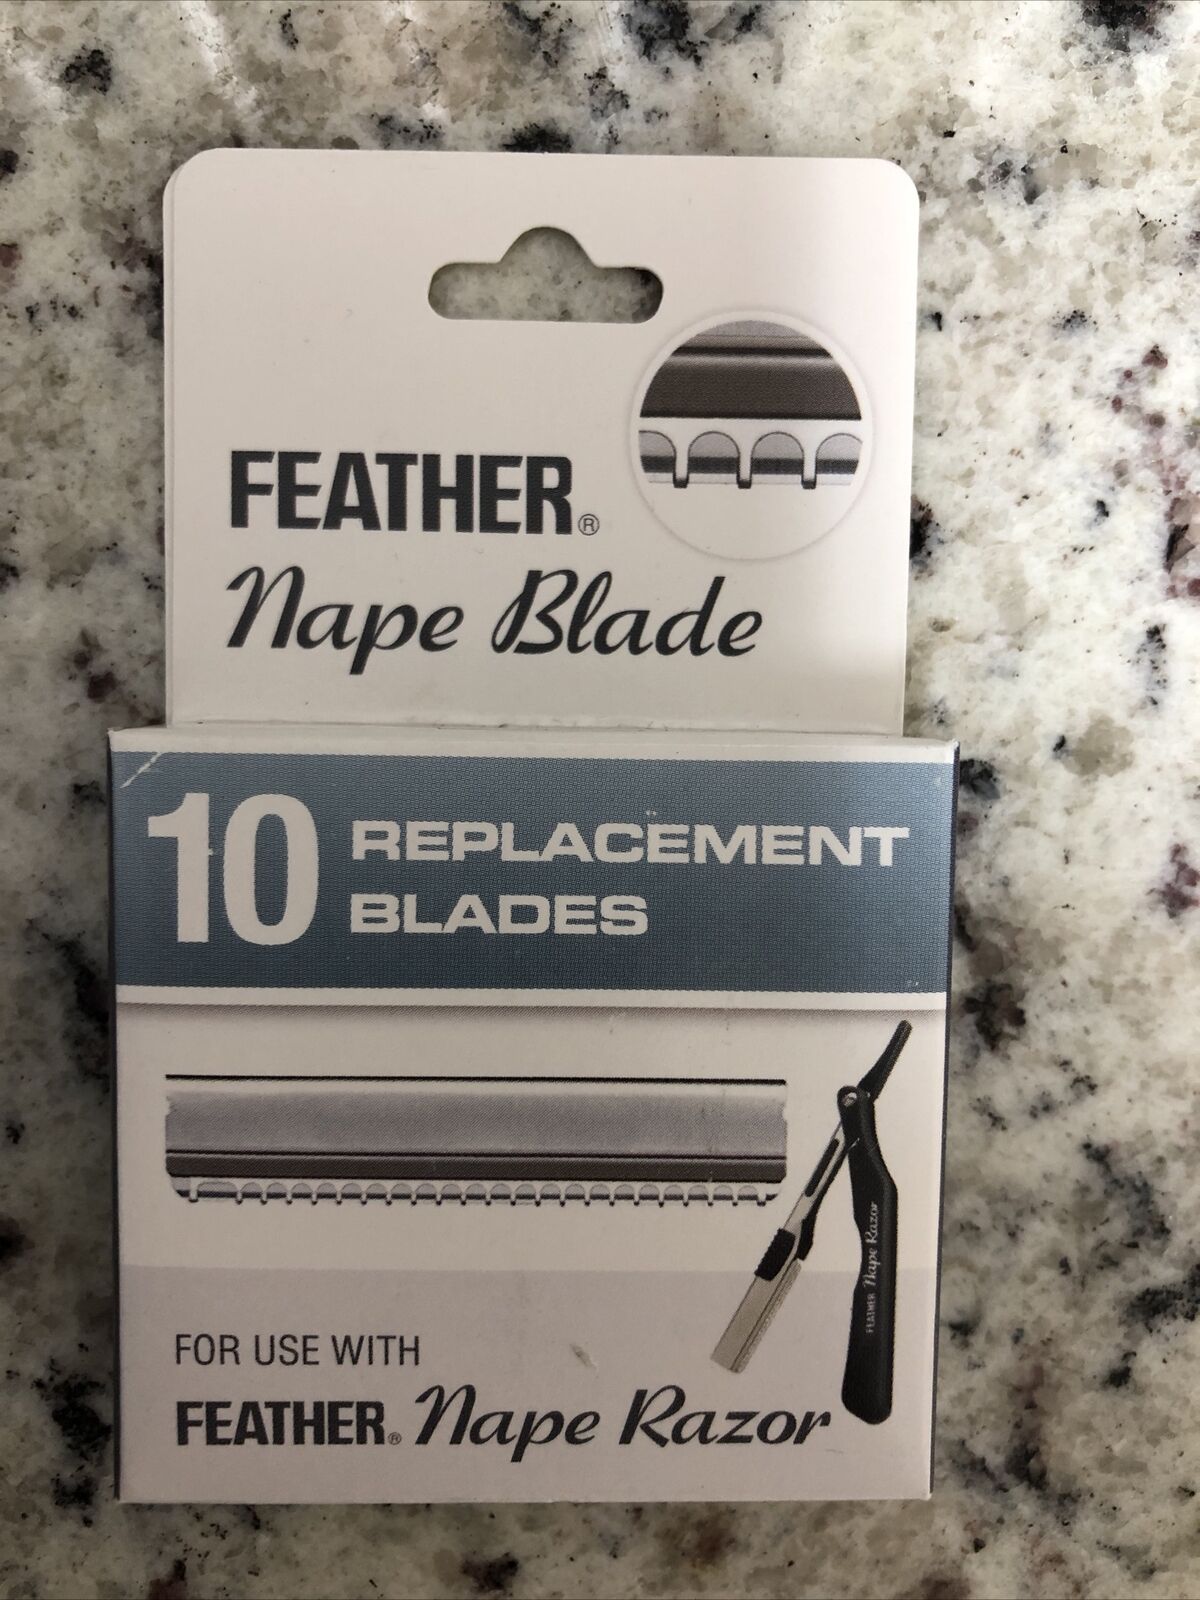 Jatai Feather Nape & Body Razor Replacement Blades -10ct ($15.00 with )